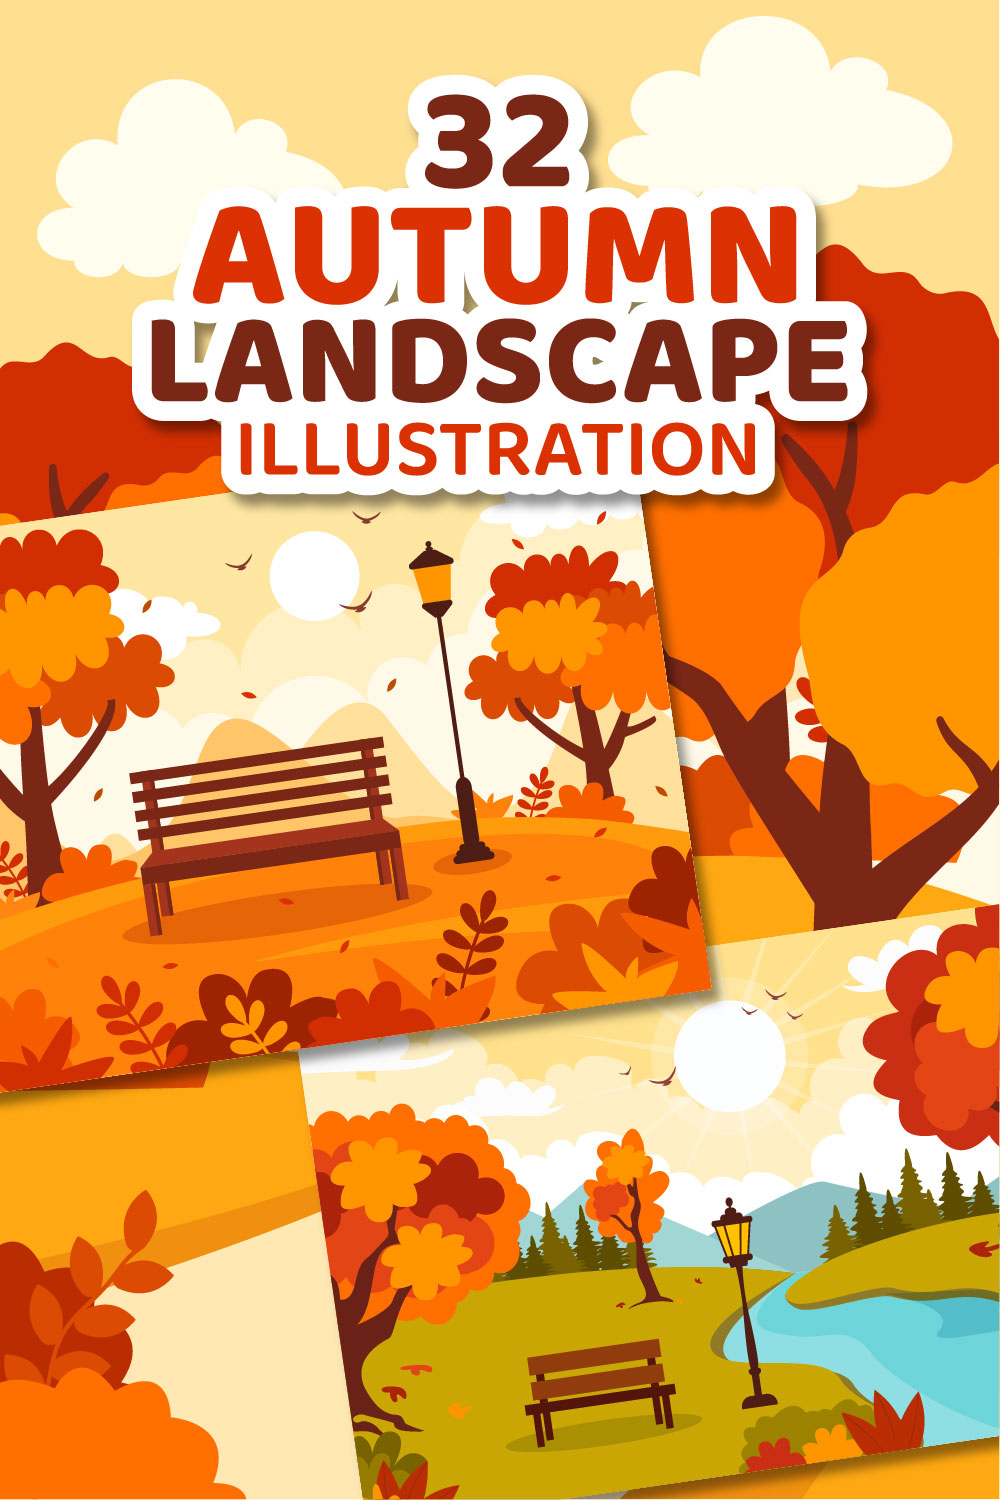 32 Autumn Landscape Background Illustration pinterest preview image.